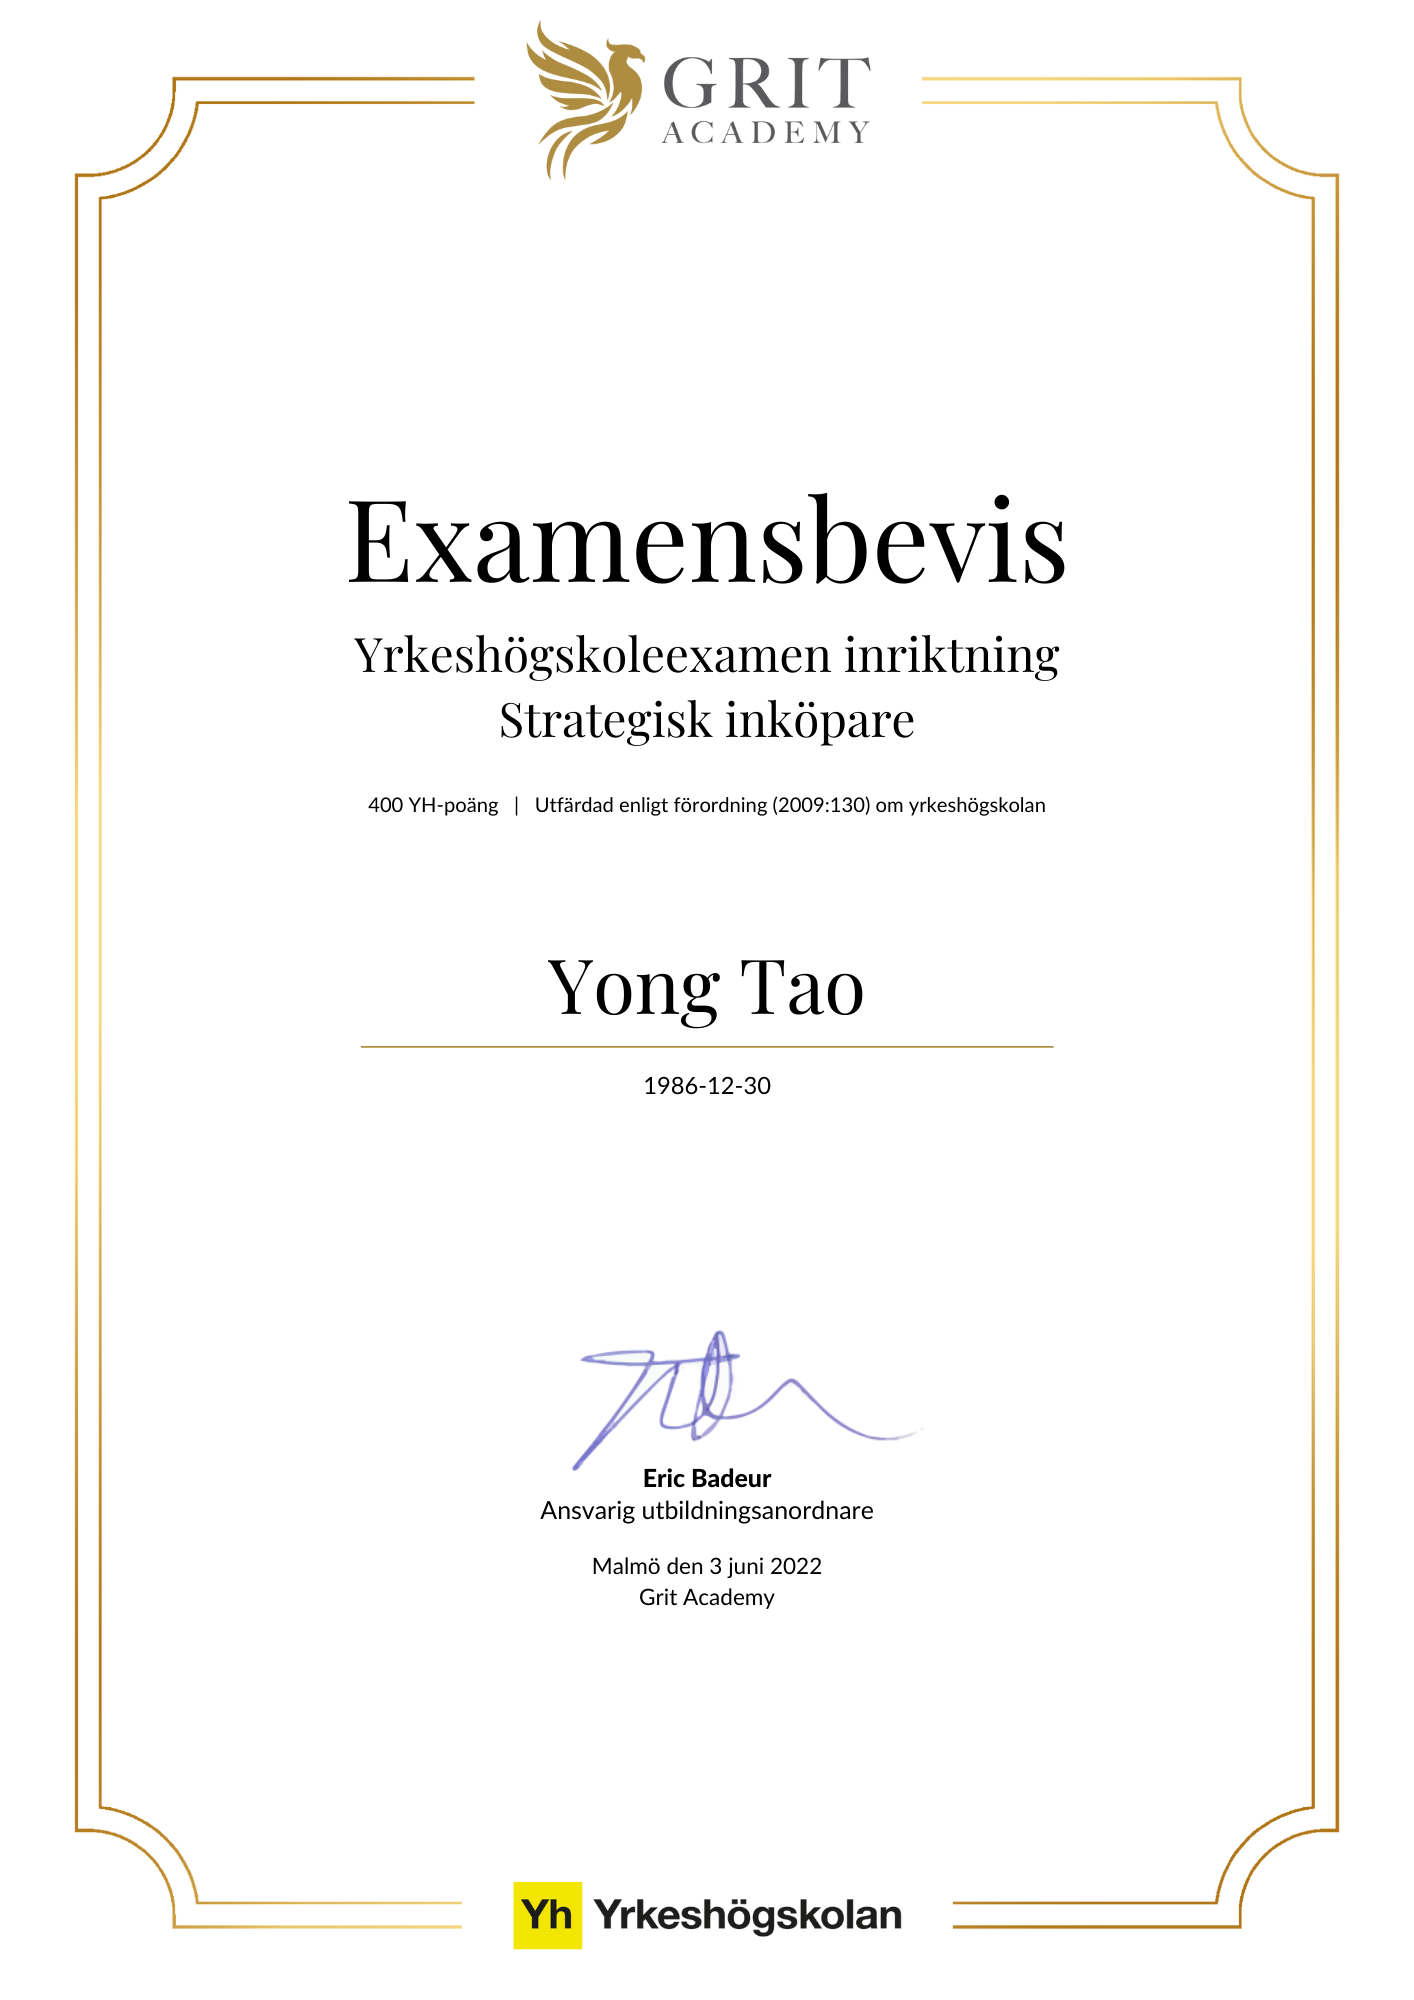 Examensbevis Yong Tao - 1